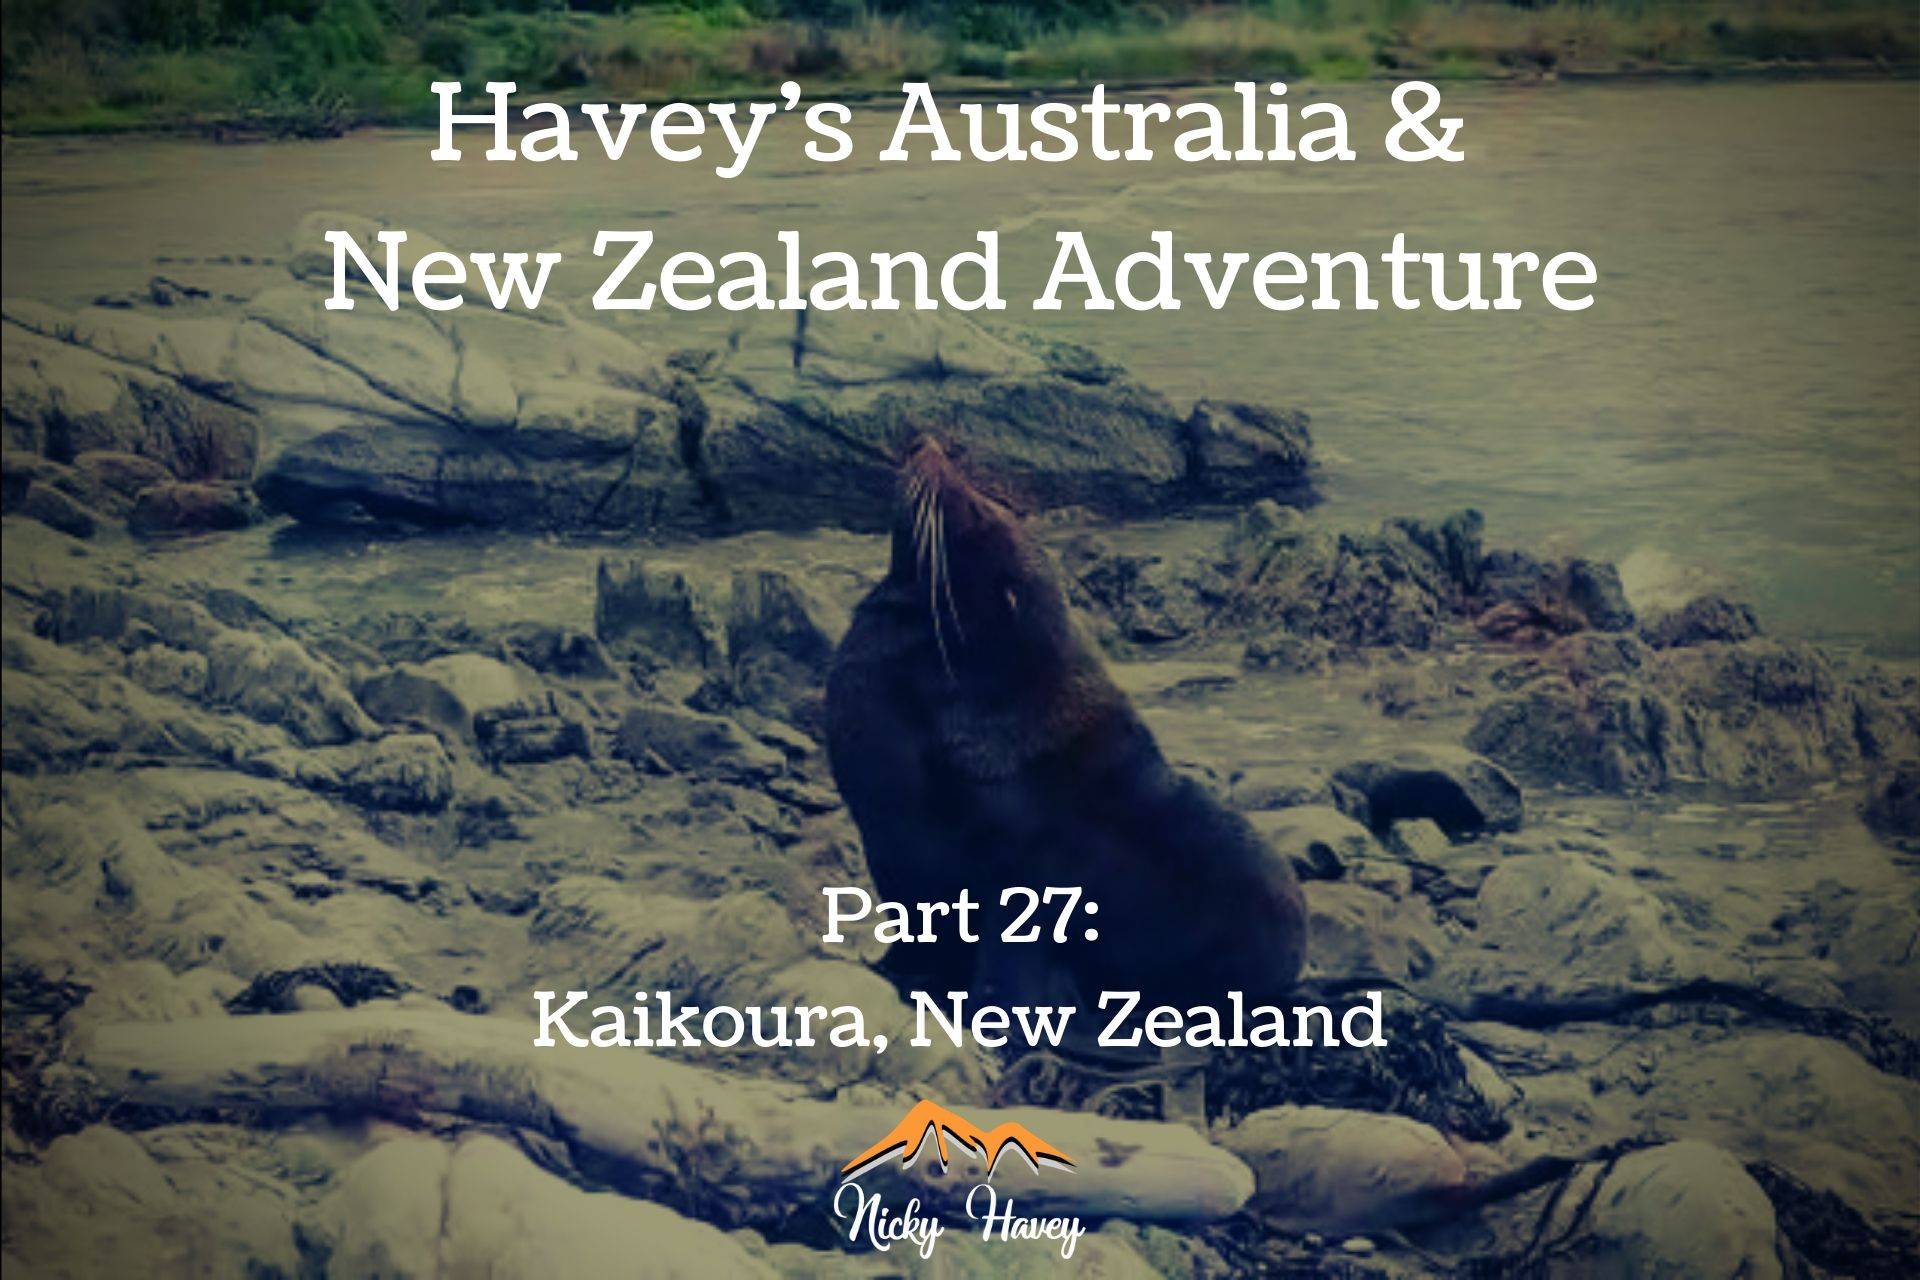 Havey's Australia & New Zealand Adventure Part 27 - Kaikoura, New Zealand